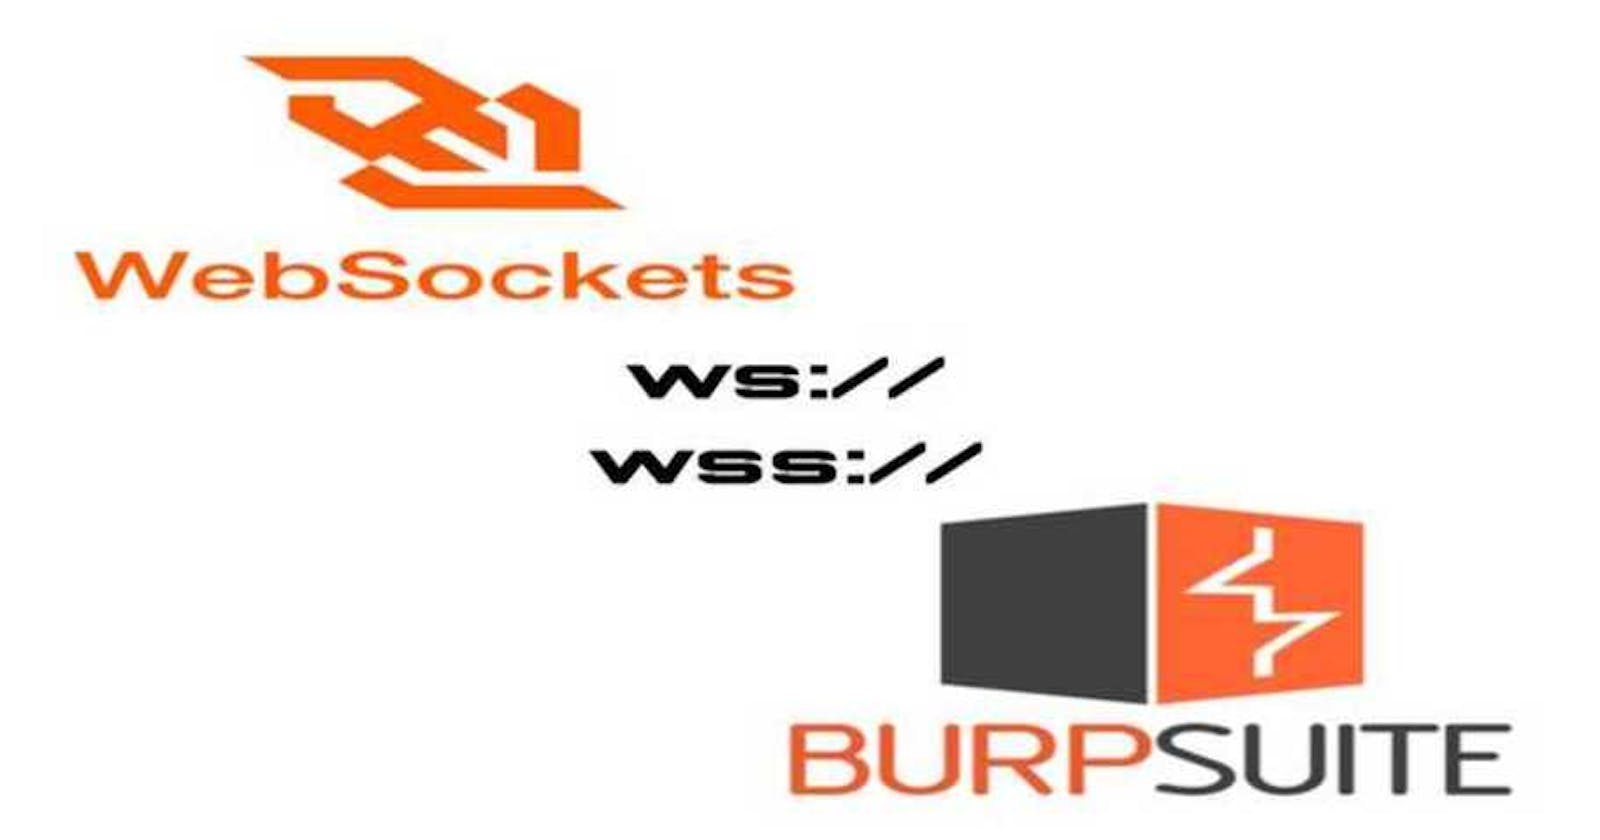 Fuzzing WebSocket messages on Burpsuite